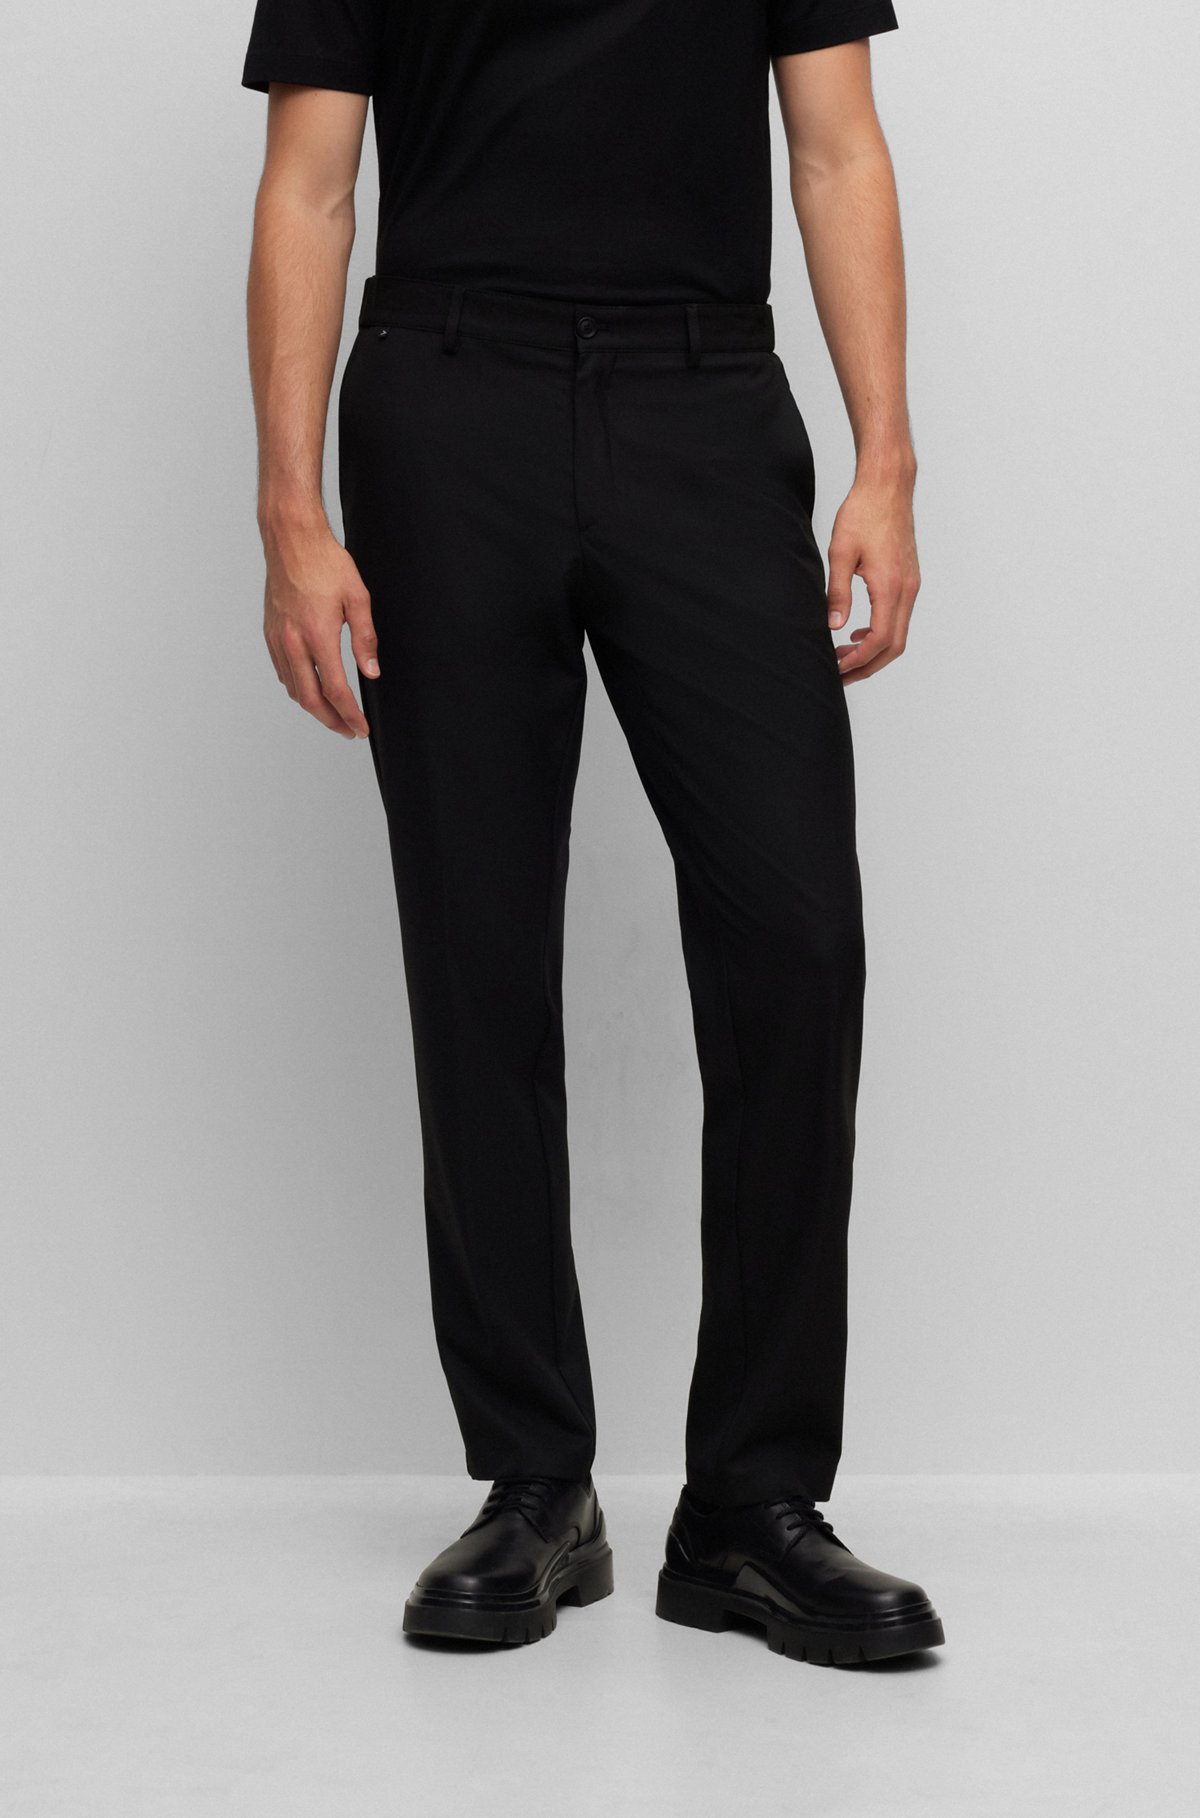 Pantalon Slim Fit en tissu stretch performant à micro motif, Noir